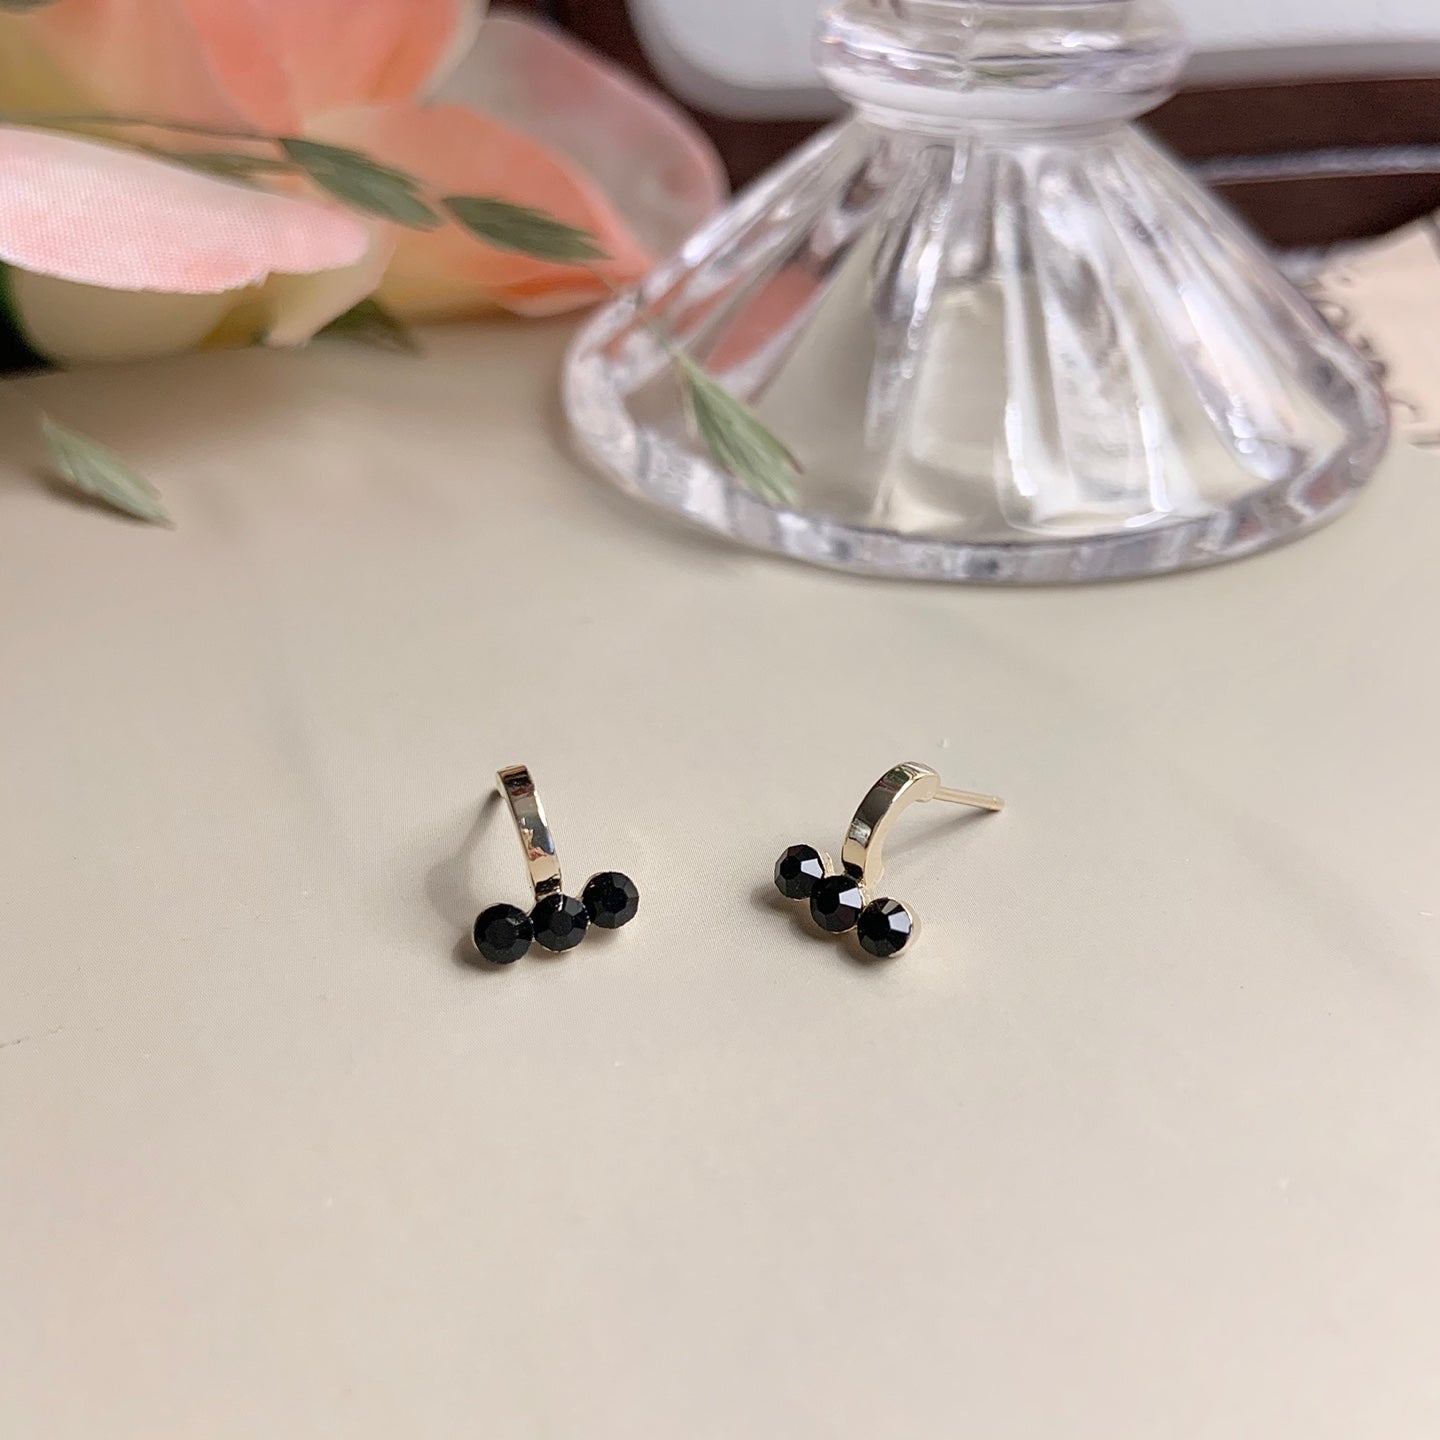 Triple Small Pearl Huggie Earrings - MARMELO USA